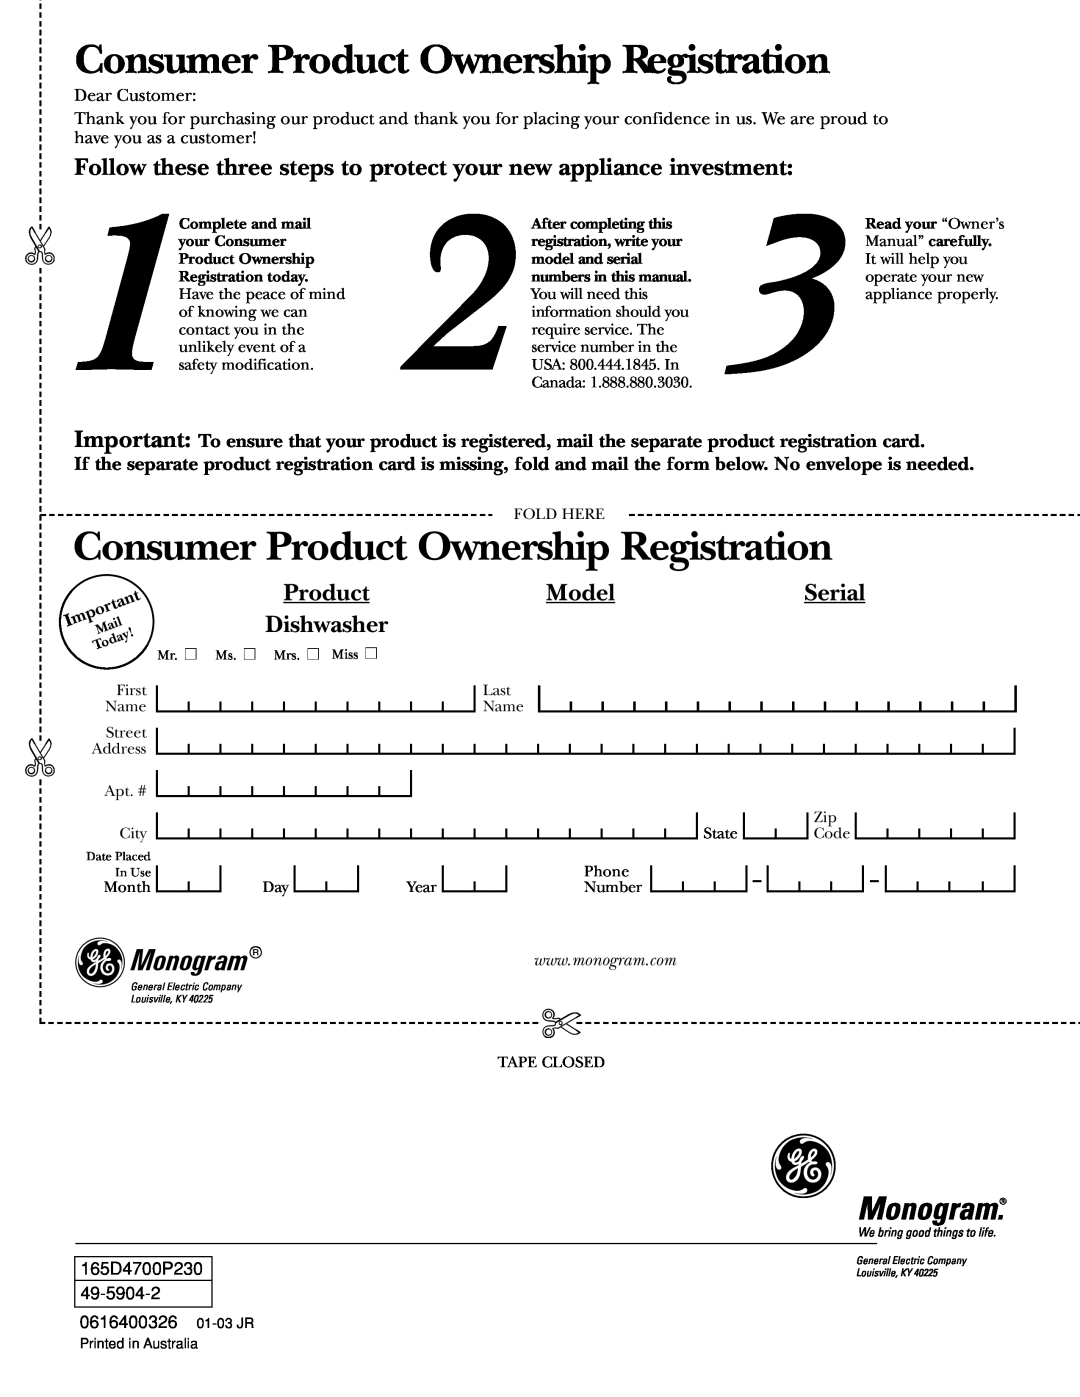 GE ZBD6700, ZBD6400, ZBD6900, ZBD6600, ZBD6500 Consumer Product Ownership Registration, Monogram, Model, Dishwasher, Serial 